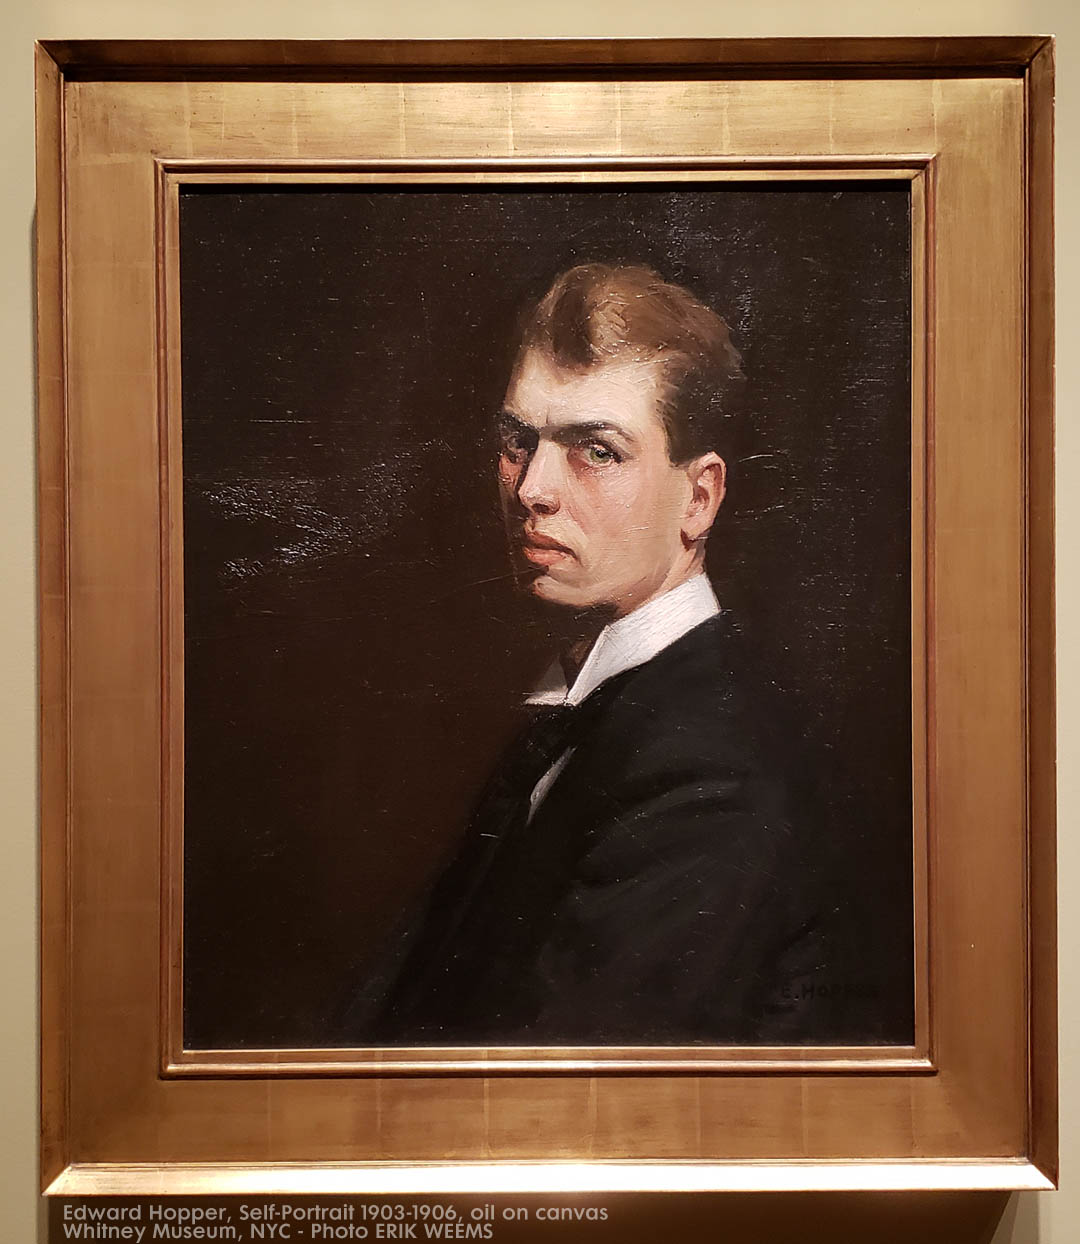 Self Portrait by Edward Hopper 1903-1906 oil on canvas